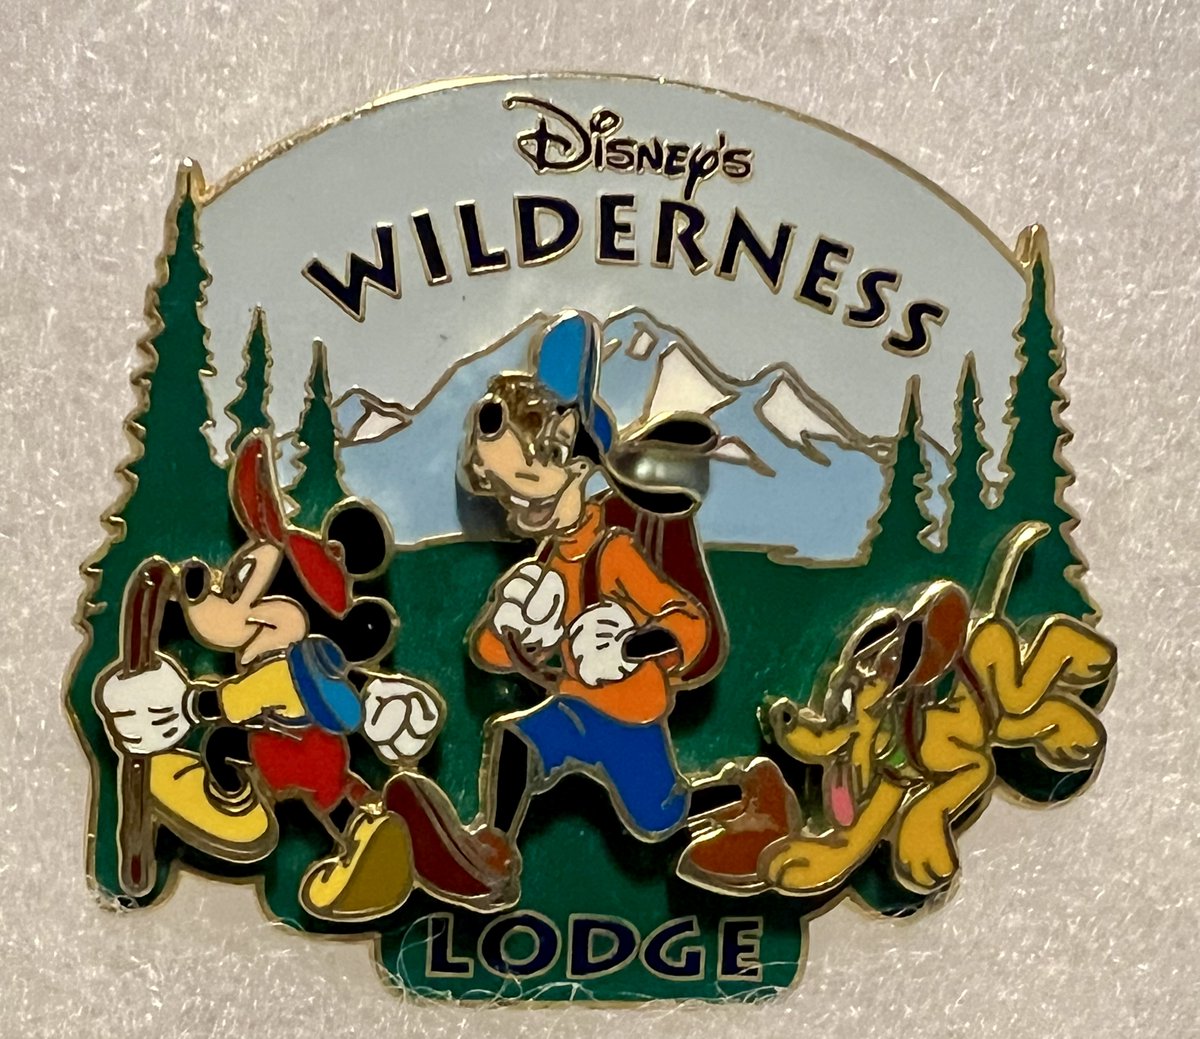 RARE #DISNEYPIN Fort Wilderness Lodge #Mickey #Goofy #Pluto Hiking WDW 2003 FREE SHIP

#disneyresorts #disneypins #disneypinsforsale #disneycollectibles #goofypins #pinpics #disneyana #camping #hiking #familyfun #retrodisney #disneysouvenir #ebayfinds

 ebay.com/itm/2667865696…